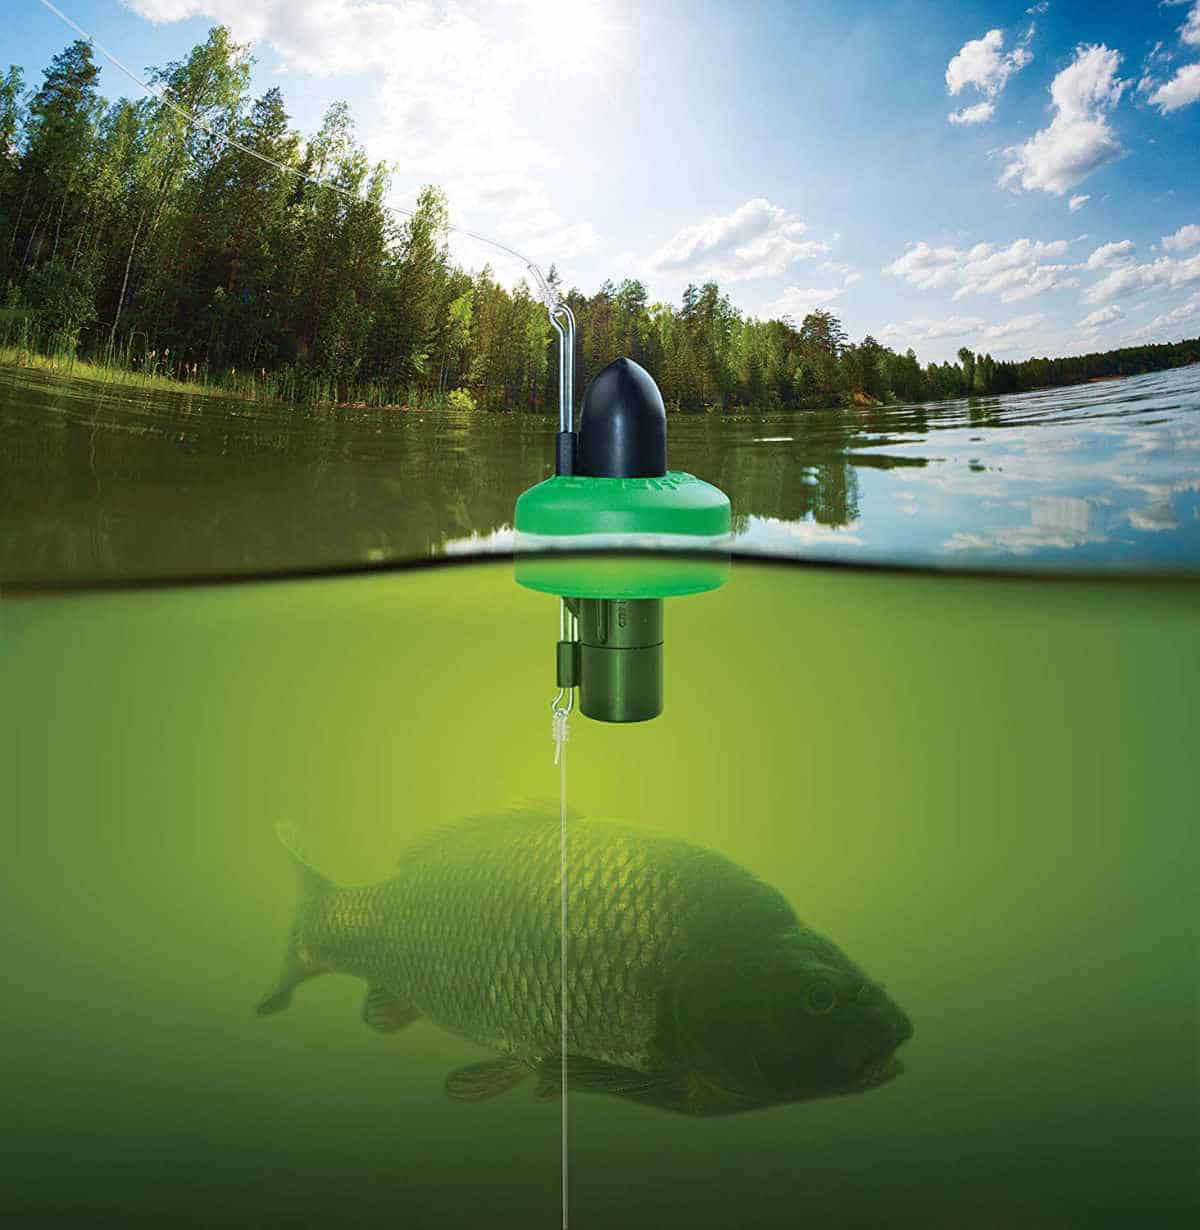 GoFish Cam Wireless Underwater Camera on water | GoFish Cam | Wireless Underwater Camera Review and First Impressions